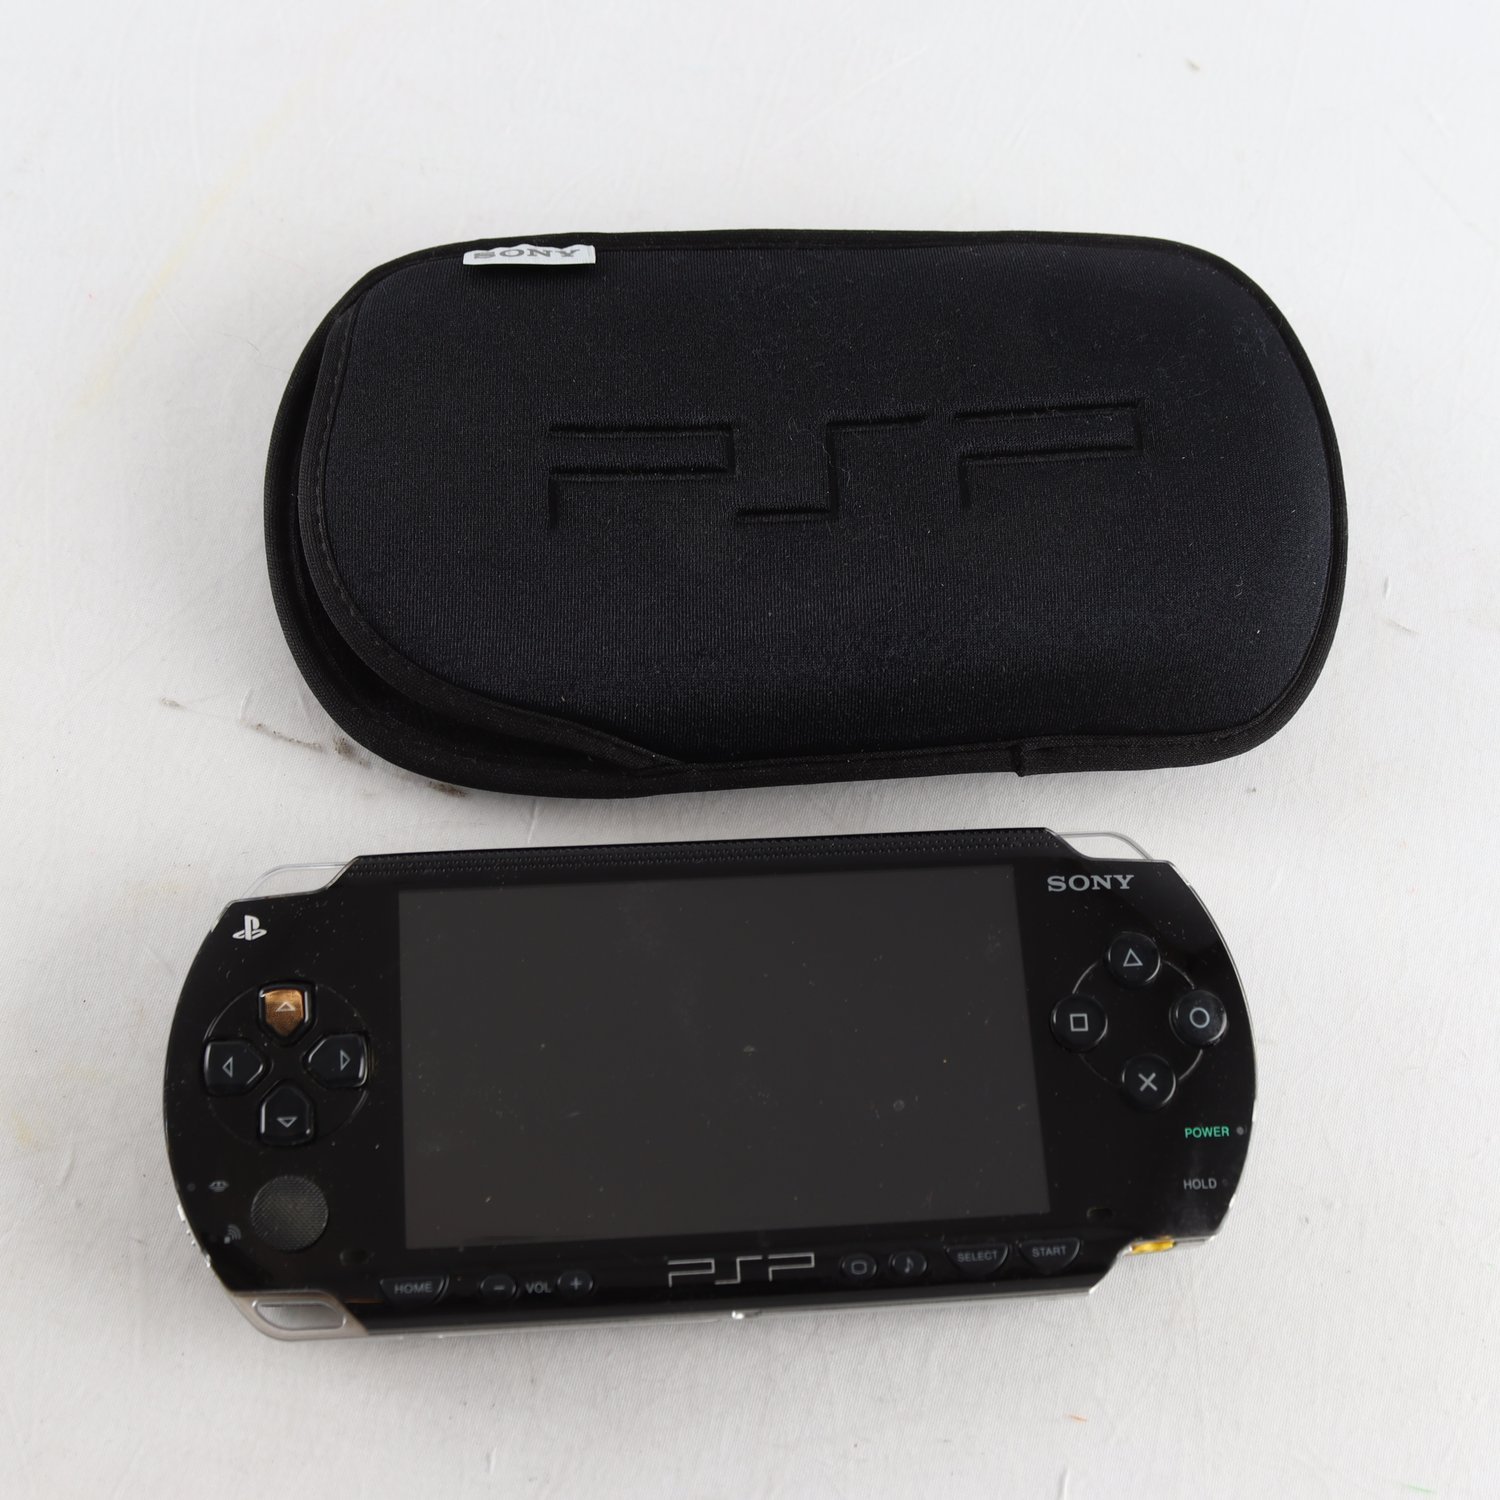 Playstation Portable, Sony, PSP.